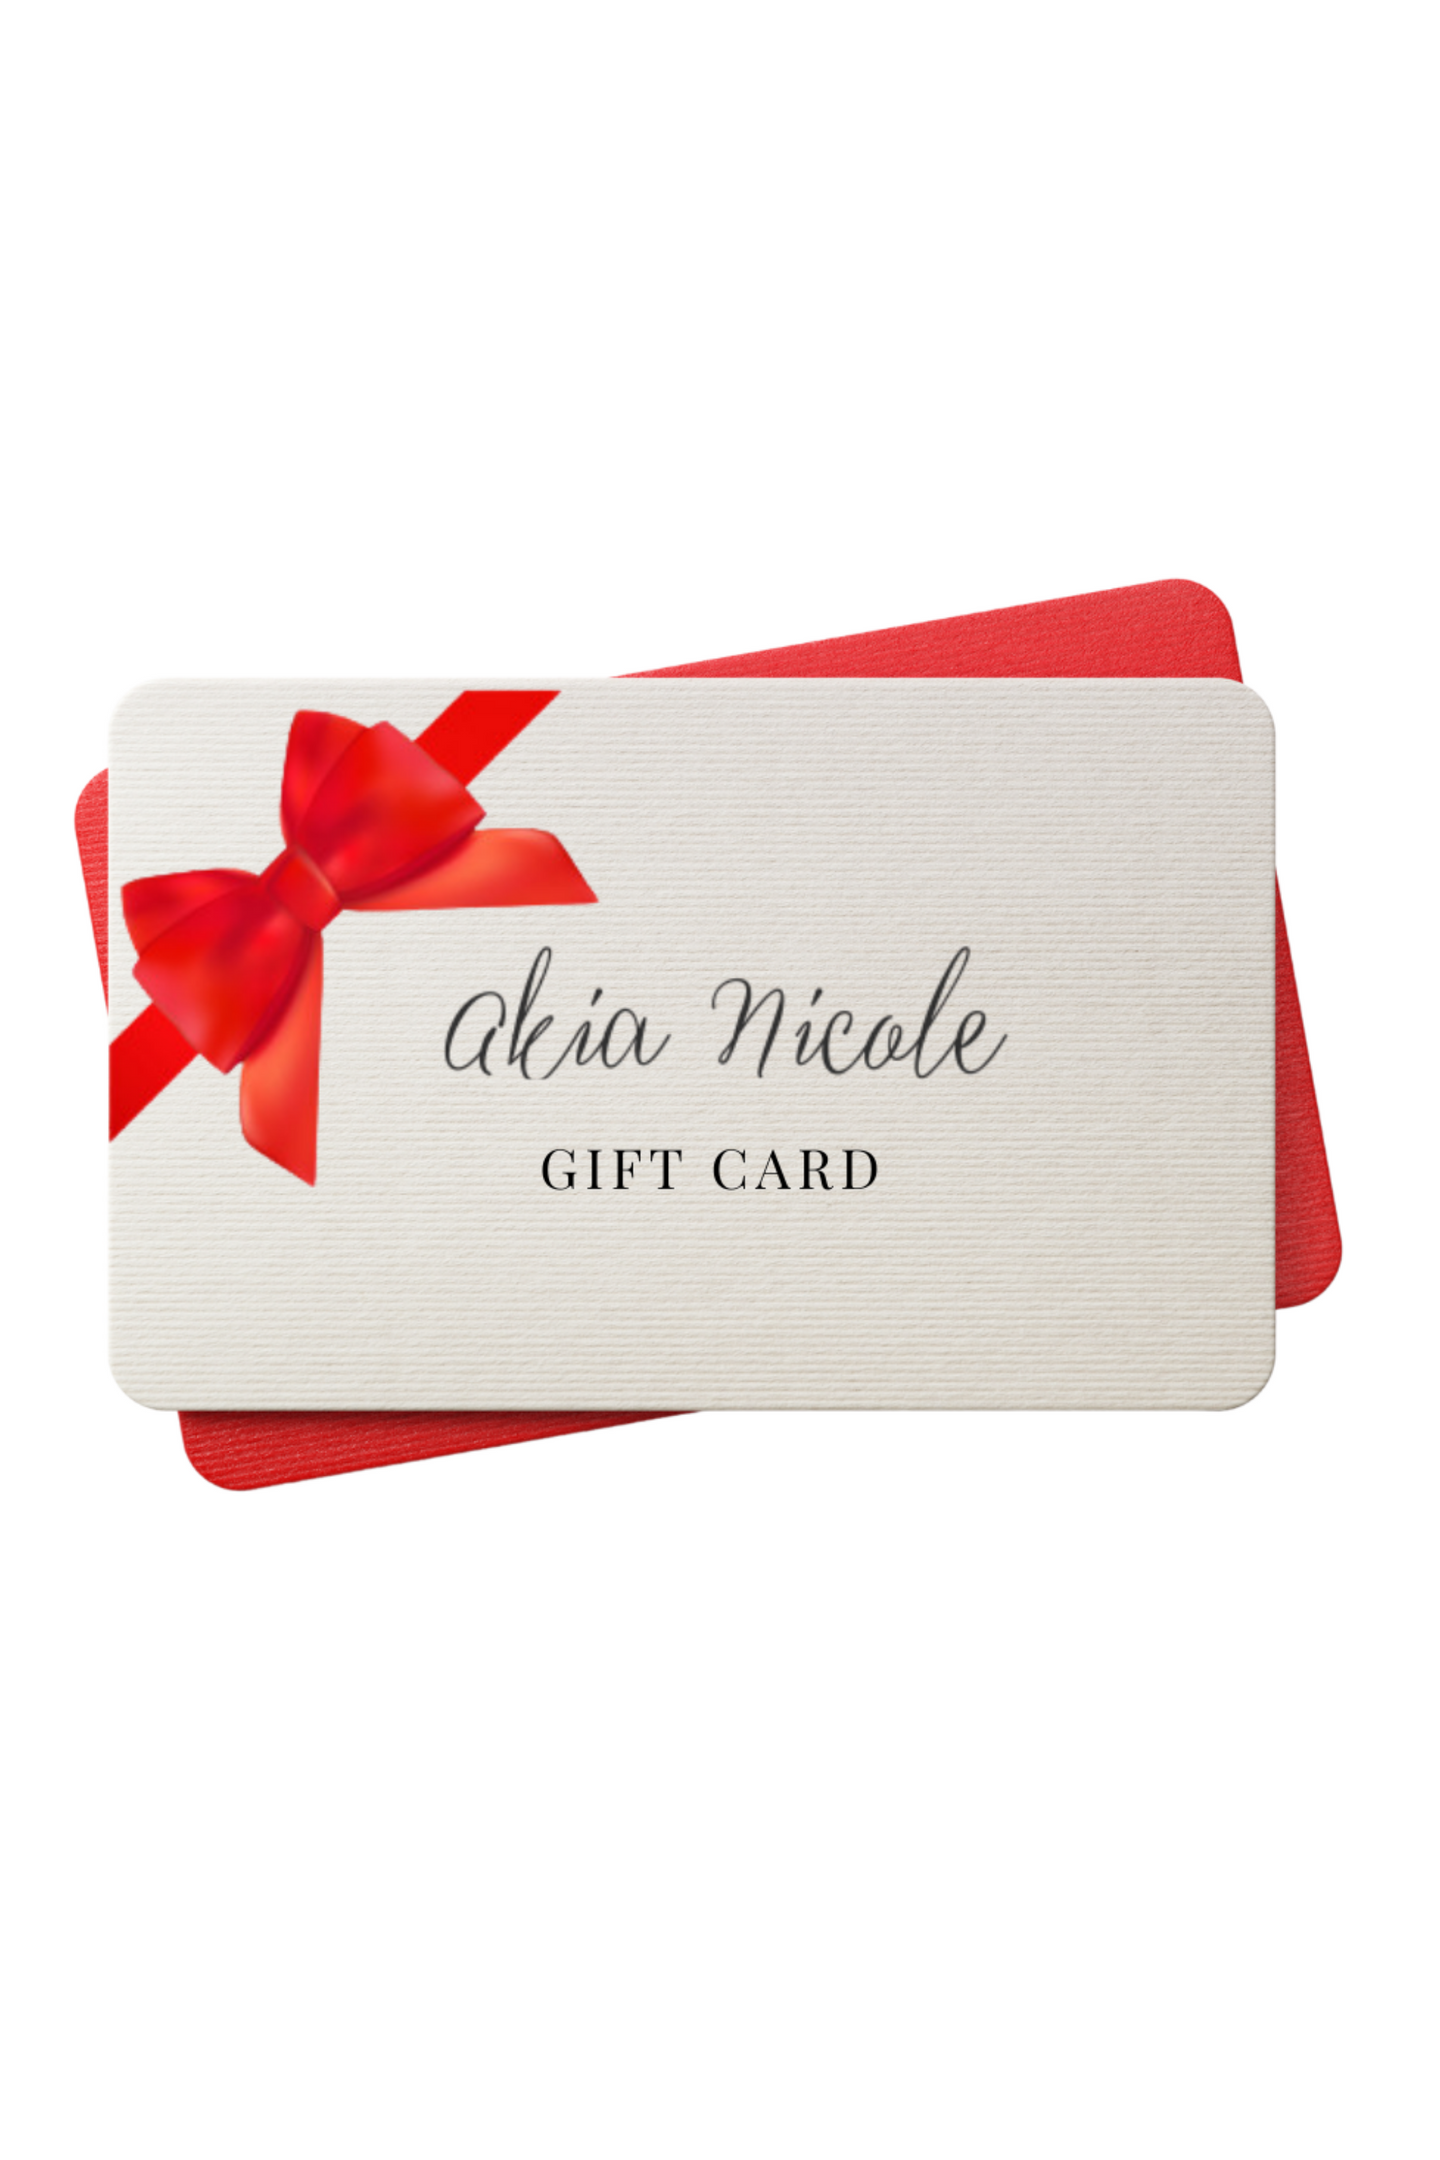 Akia Nicole Gift Card